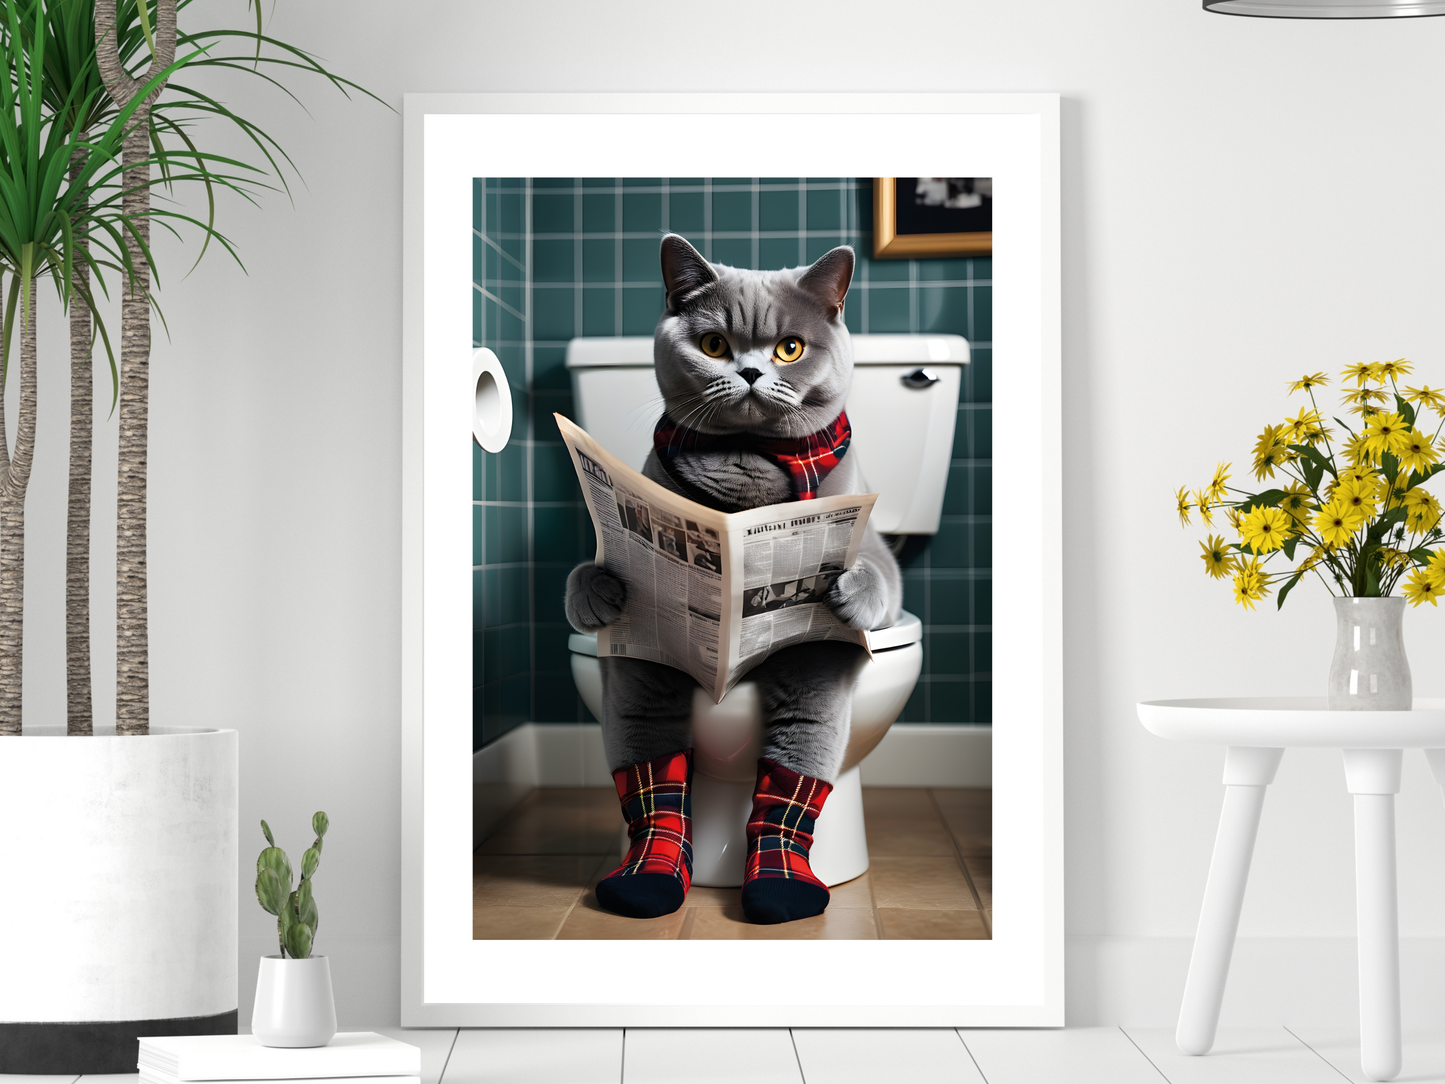 British Shorthair Cat on Toilet